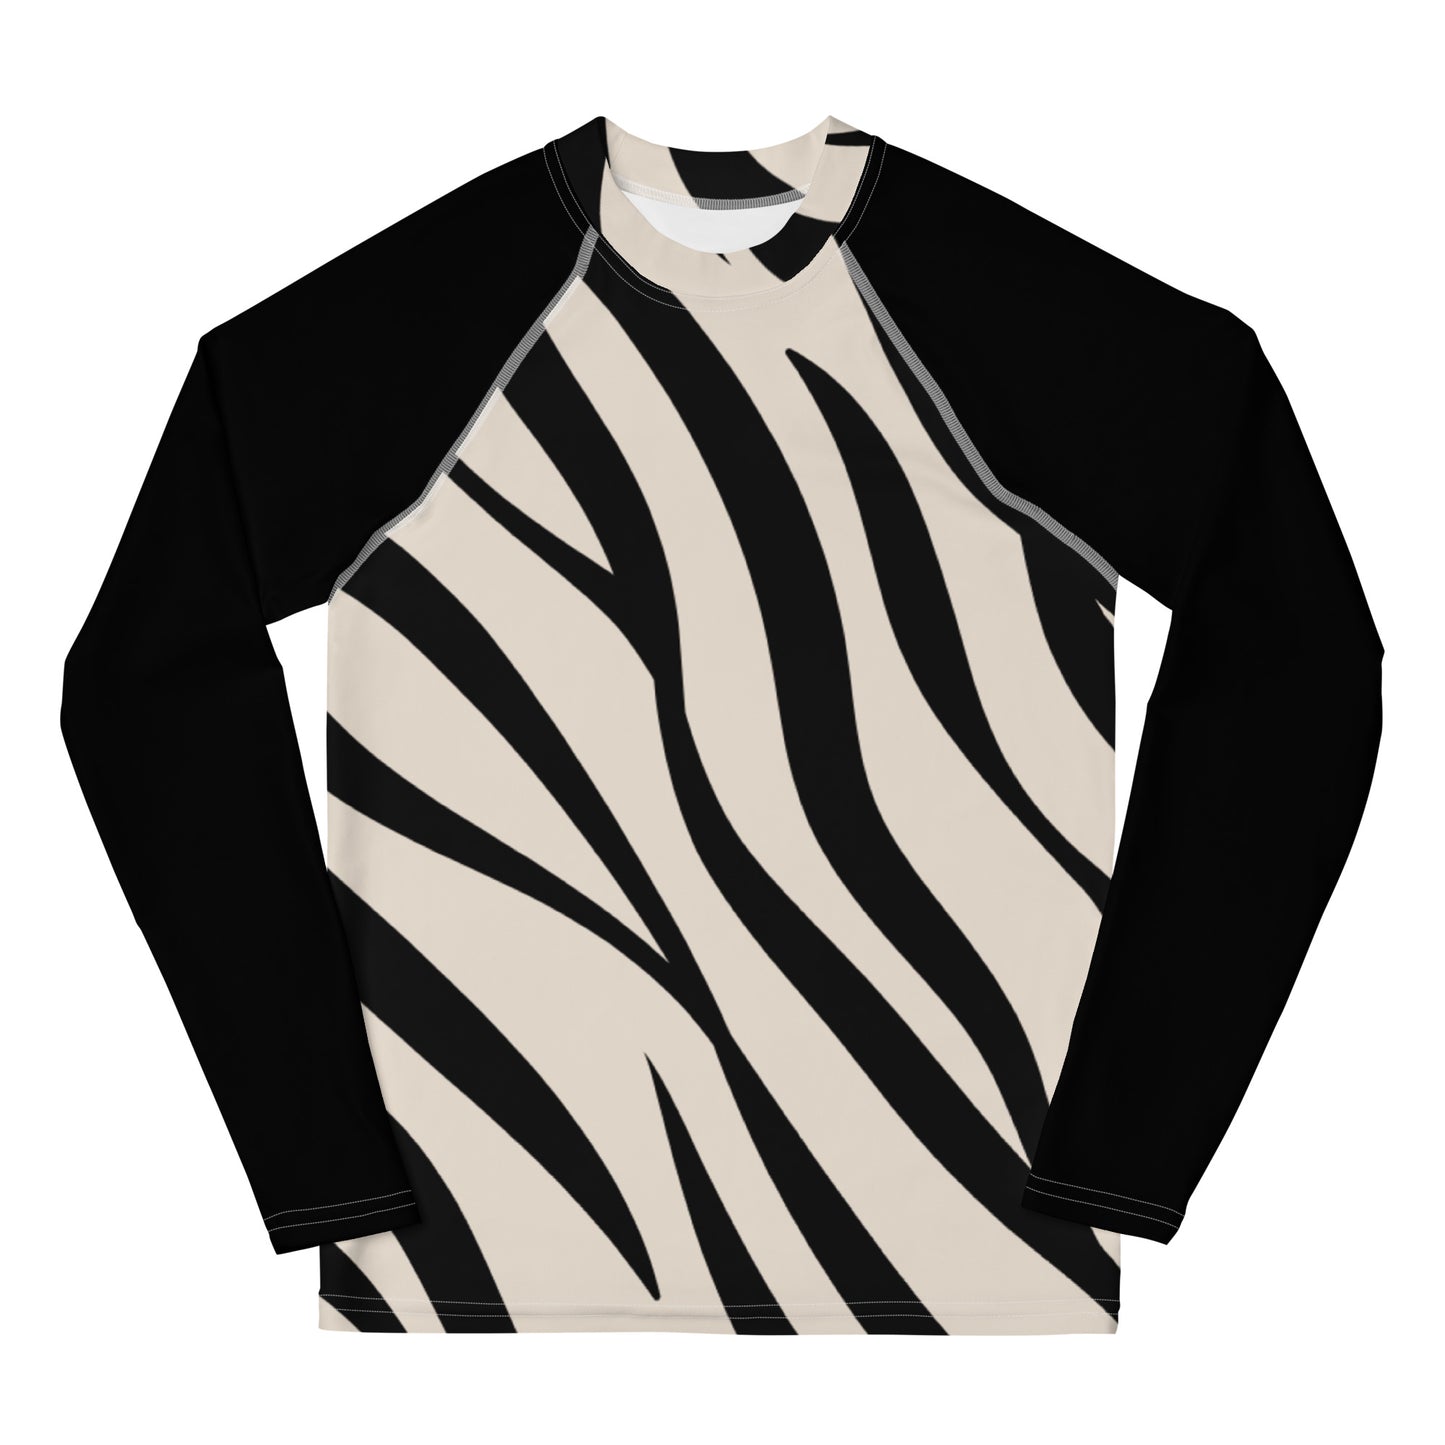 Zebra Stripes Youth Rash Guard by Baked Fresca